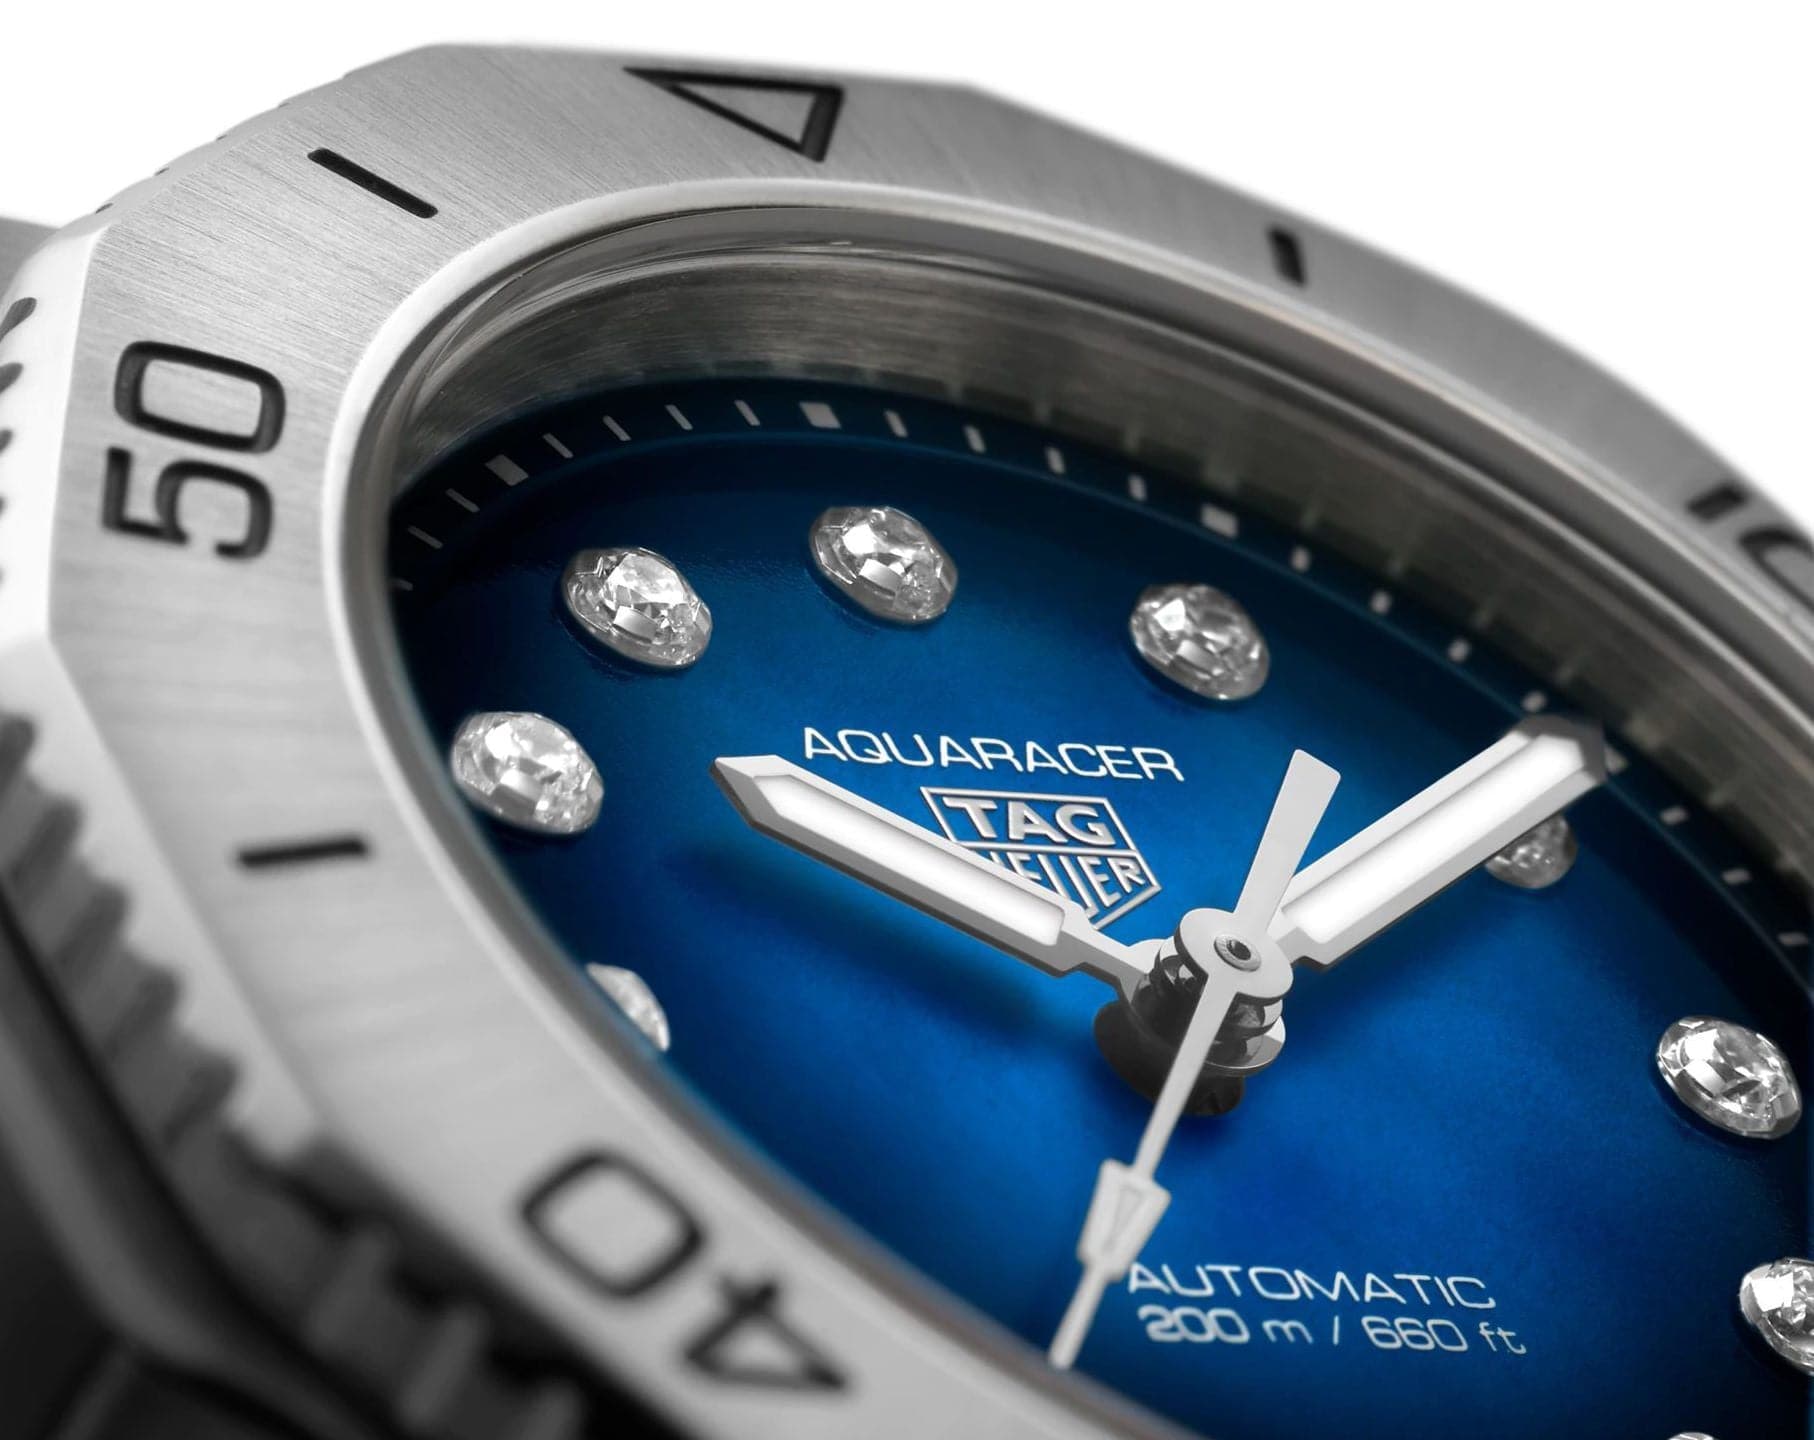 TAG HEUER Aquaracer Professional 200 Date WBP2411.BA0622 - Kamal Watch Company